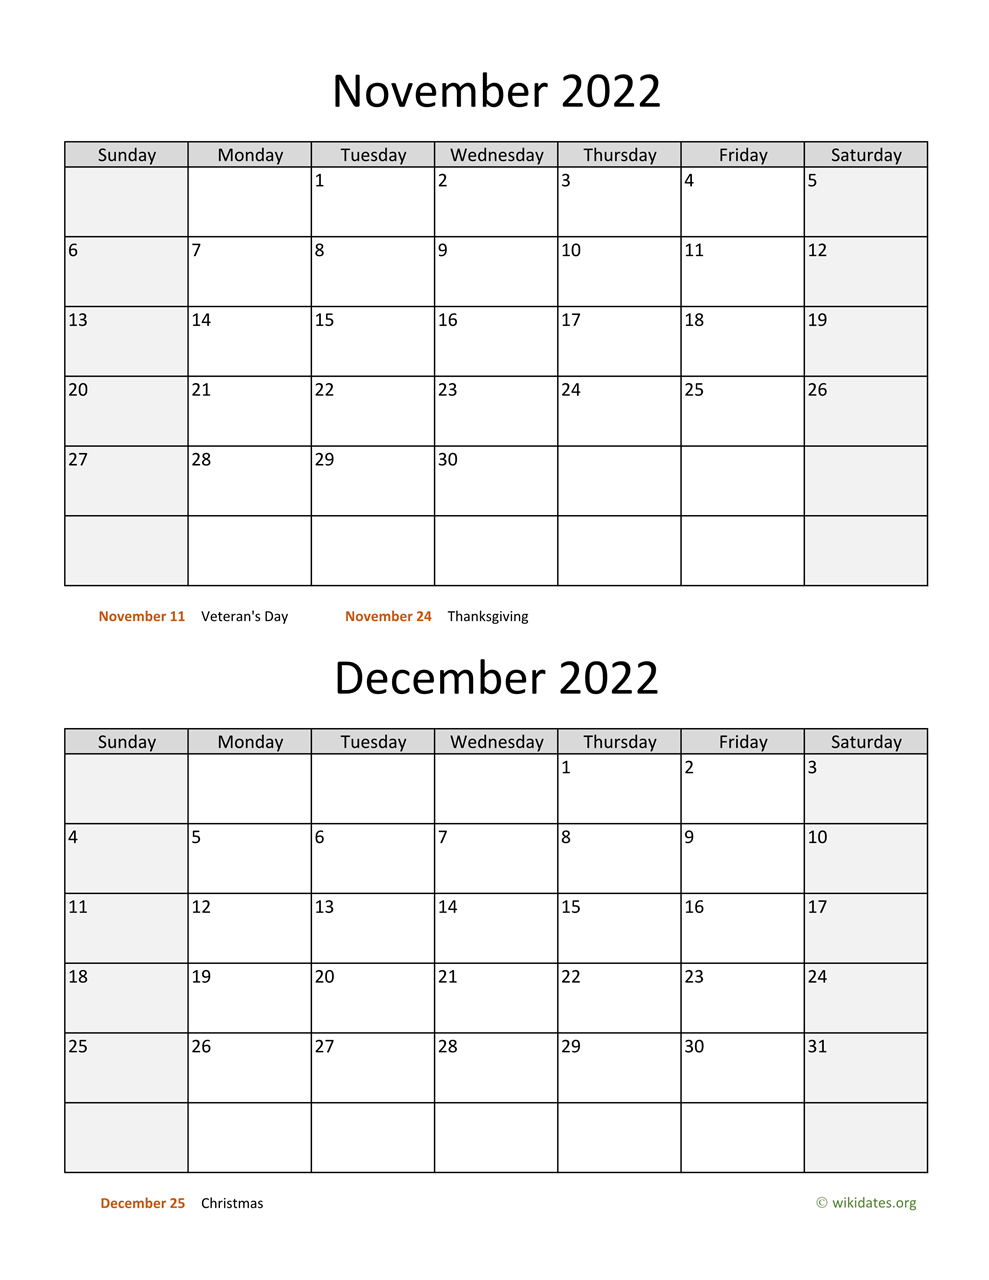 November December 2022 Calendar November And December 2022 Calendar | Wikidates.org